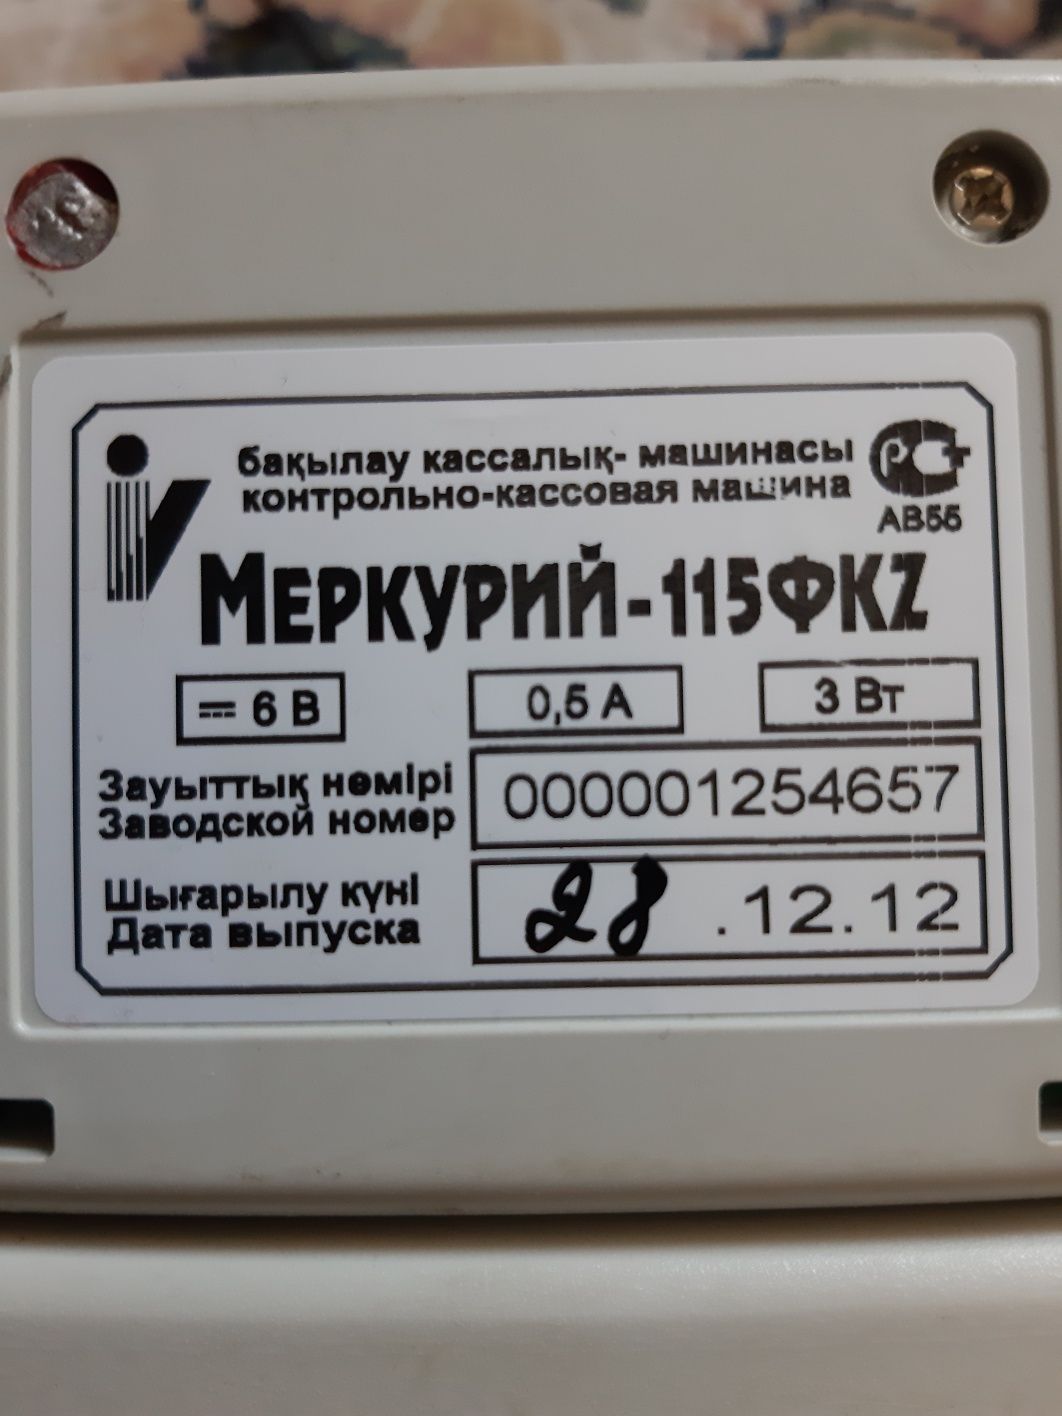 Кассовый аппарат Меркурий-115ФКZ